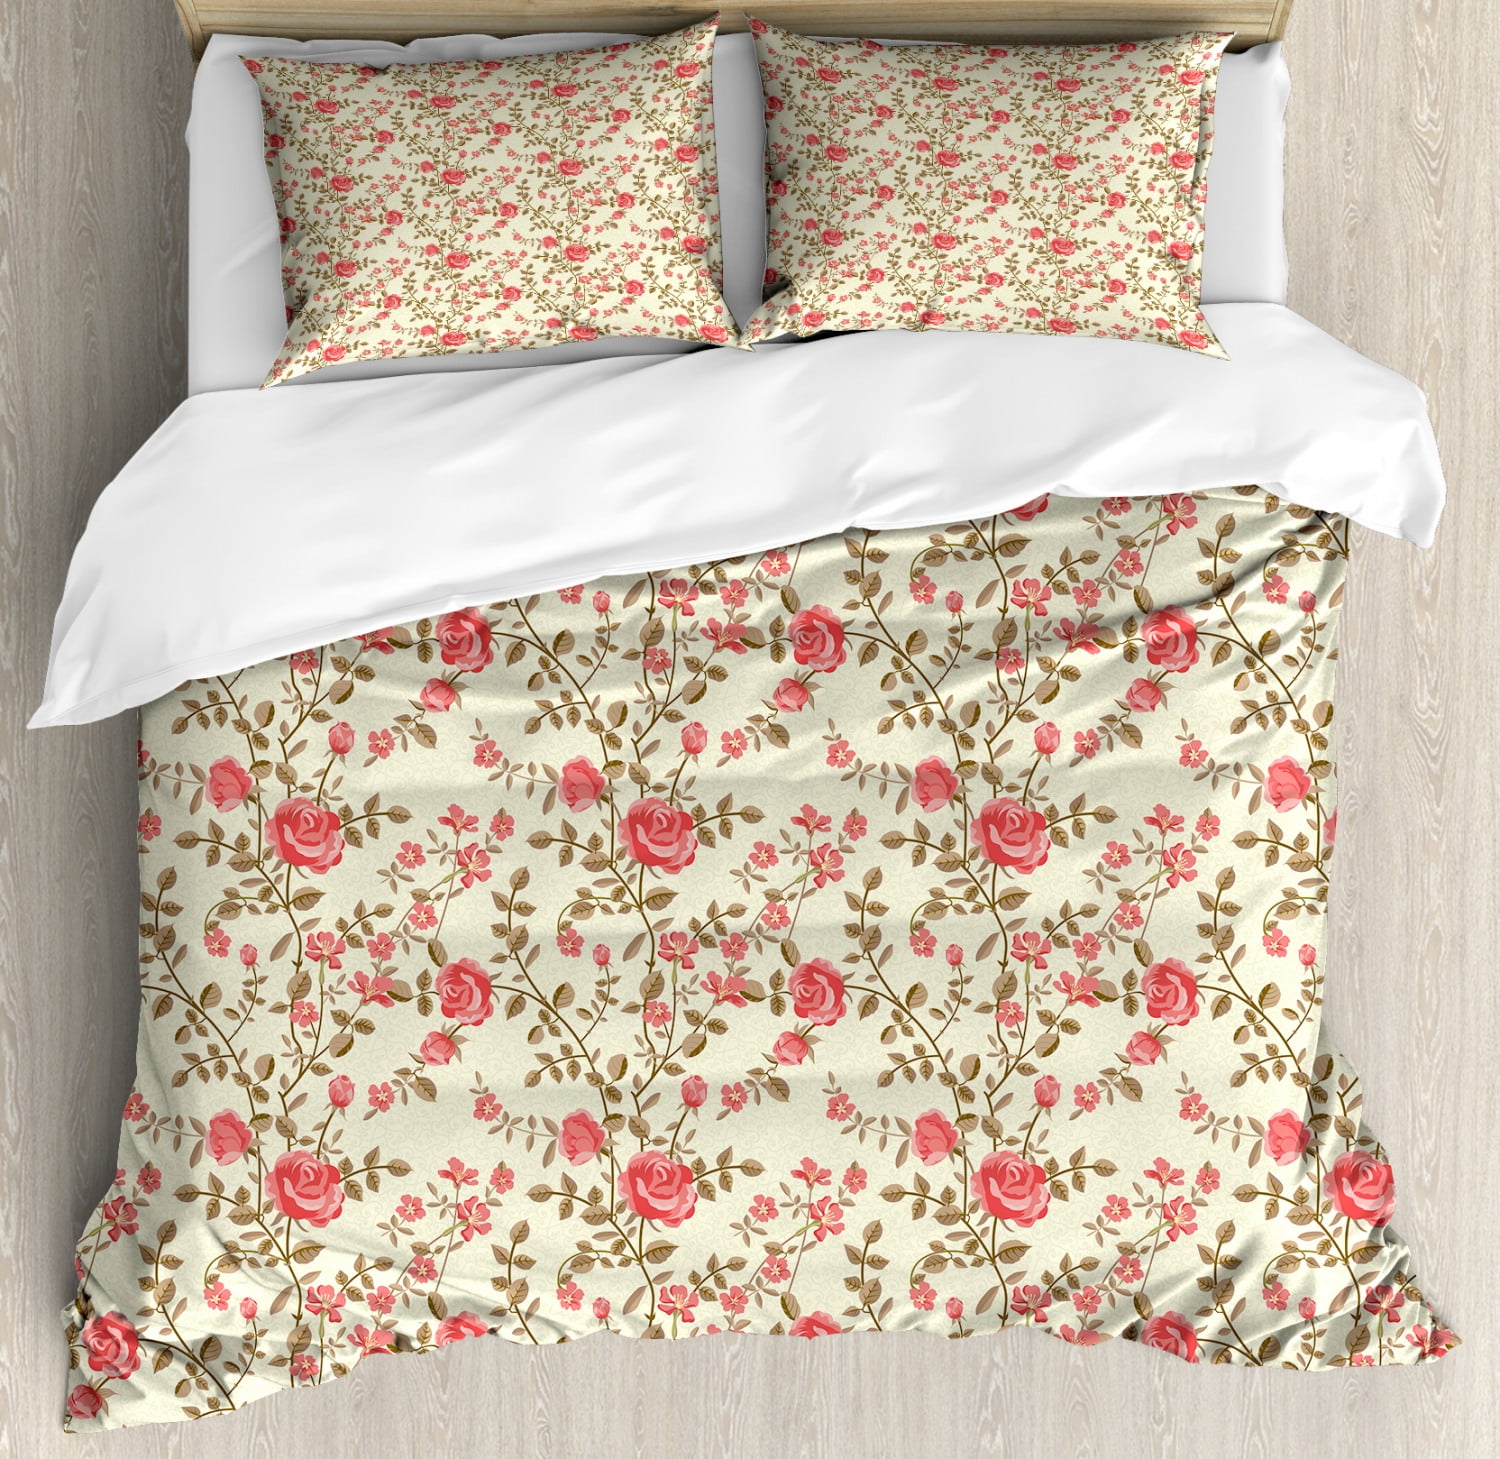 Goldstar Wisteria Butterfly Birds Floral Duvet Quilt Cover Floral Bedding Set Pillow Case Natural Double